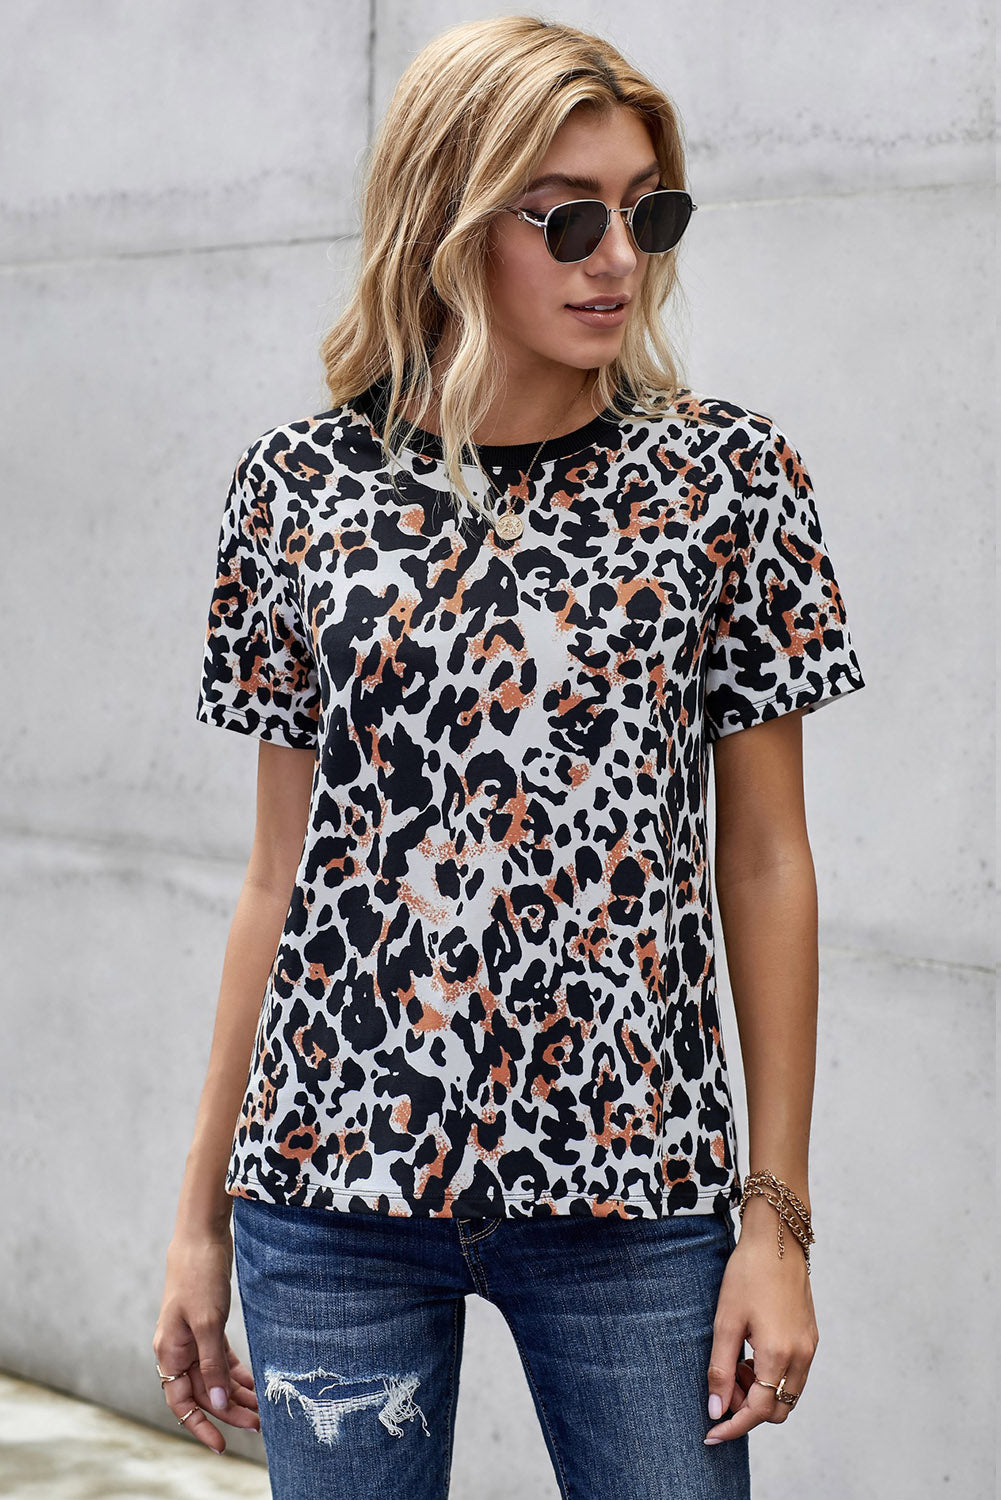 Trendsi Cupid Beauty Supplies White Leopard / S Woman's T-Shirts Leopard Print T-Shirt